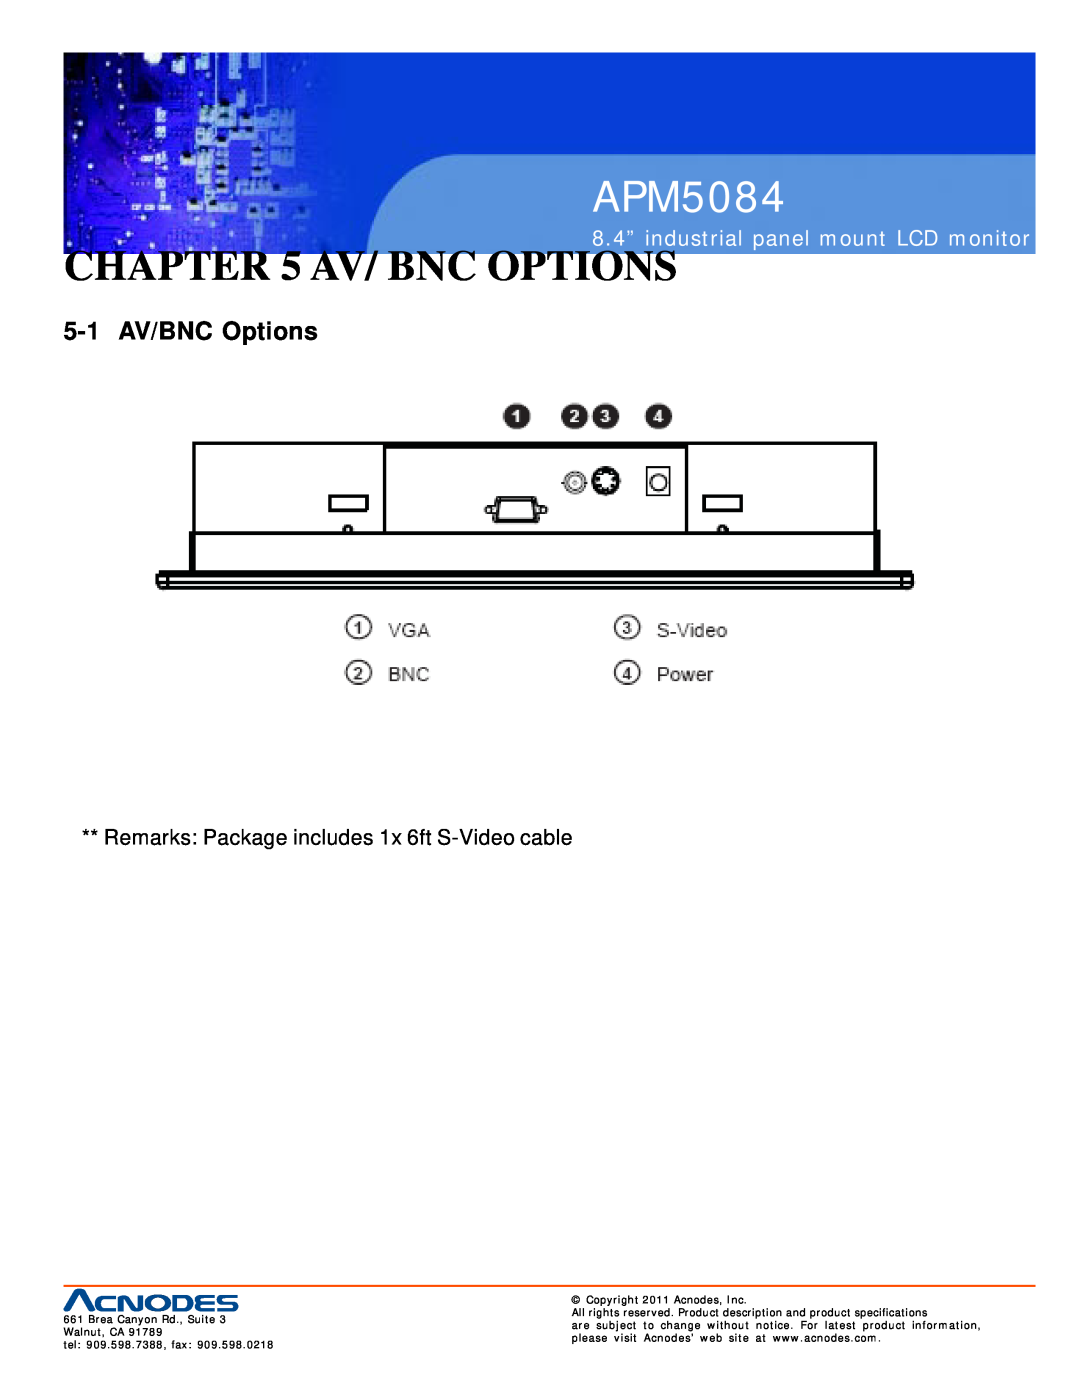 Acnodes APM5084 user manual Av/ Bnc Options, 8.4” industrial panel mount LCD monitor, Copyright 2011 Acnodes, Inc 